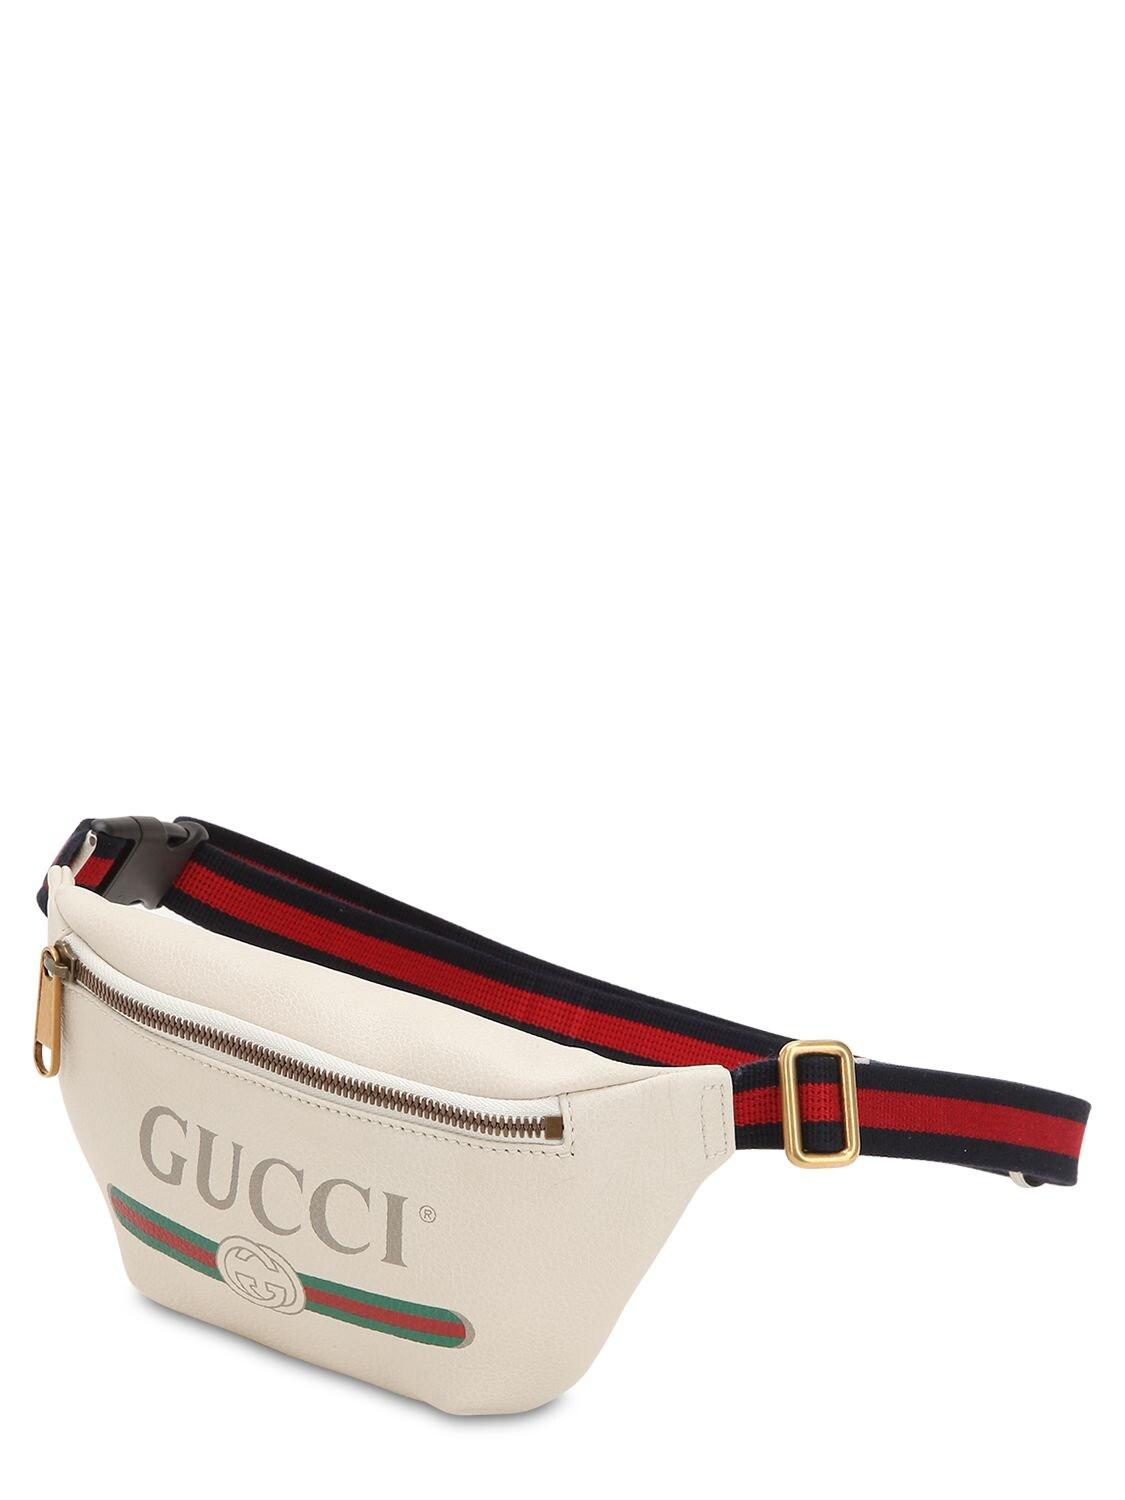 Gucci Belt Bag Gucci Print Grained Pink